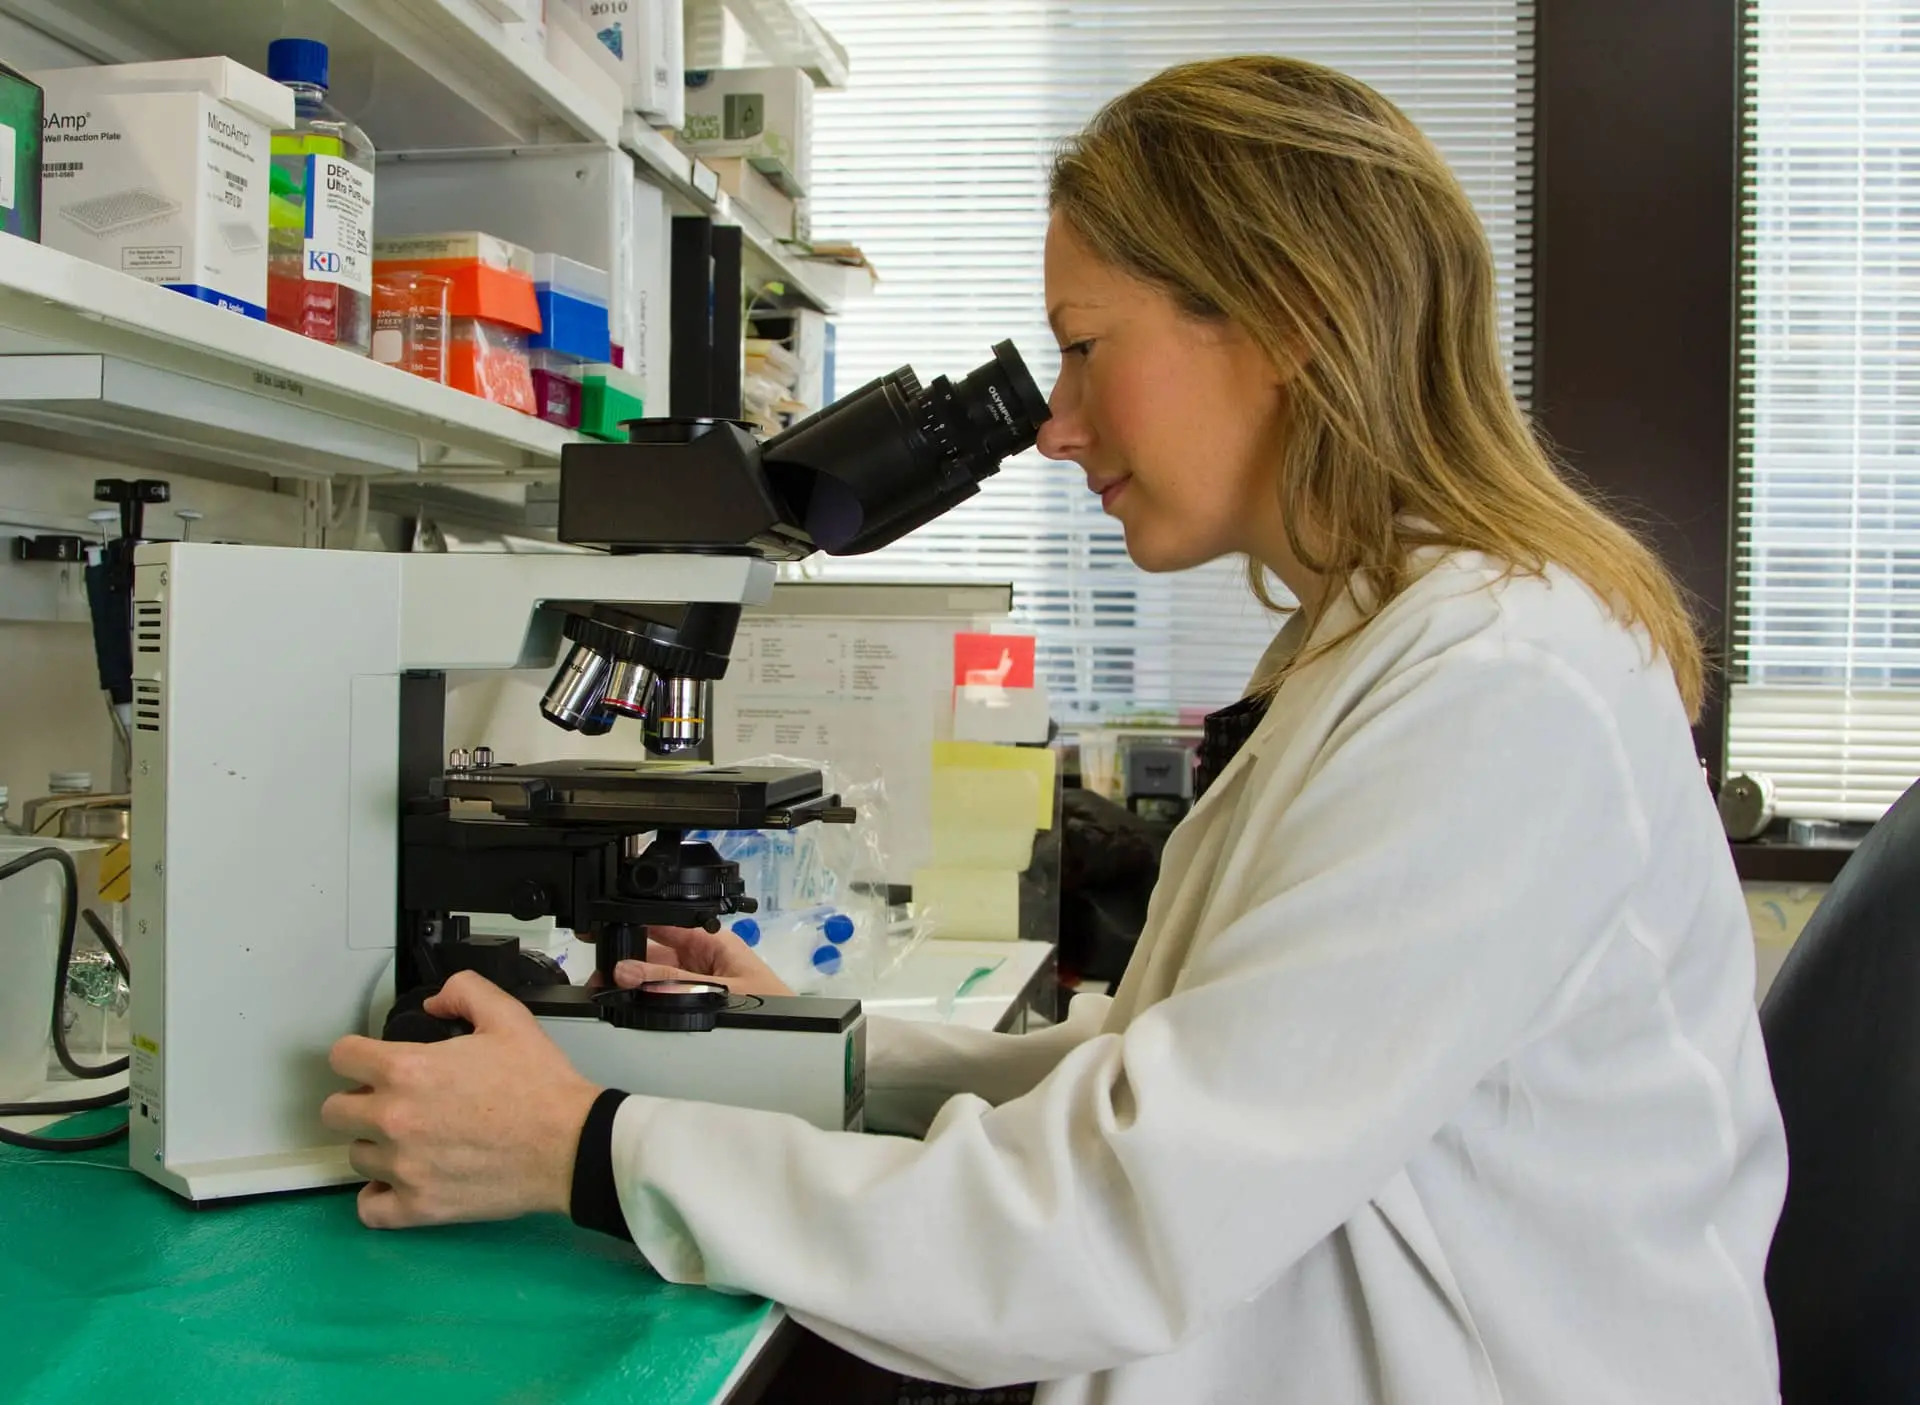 A female scientist looks through a microscope